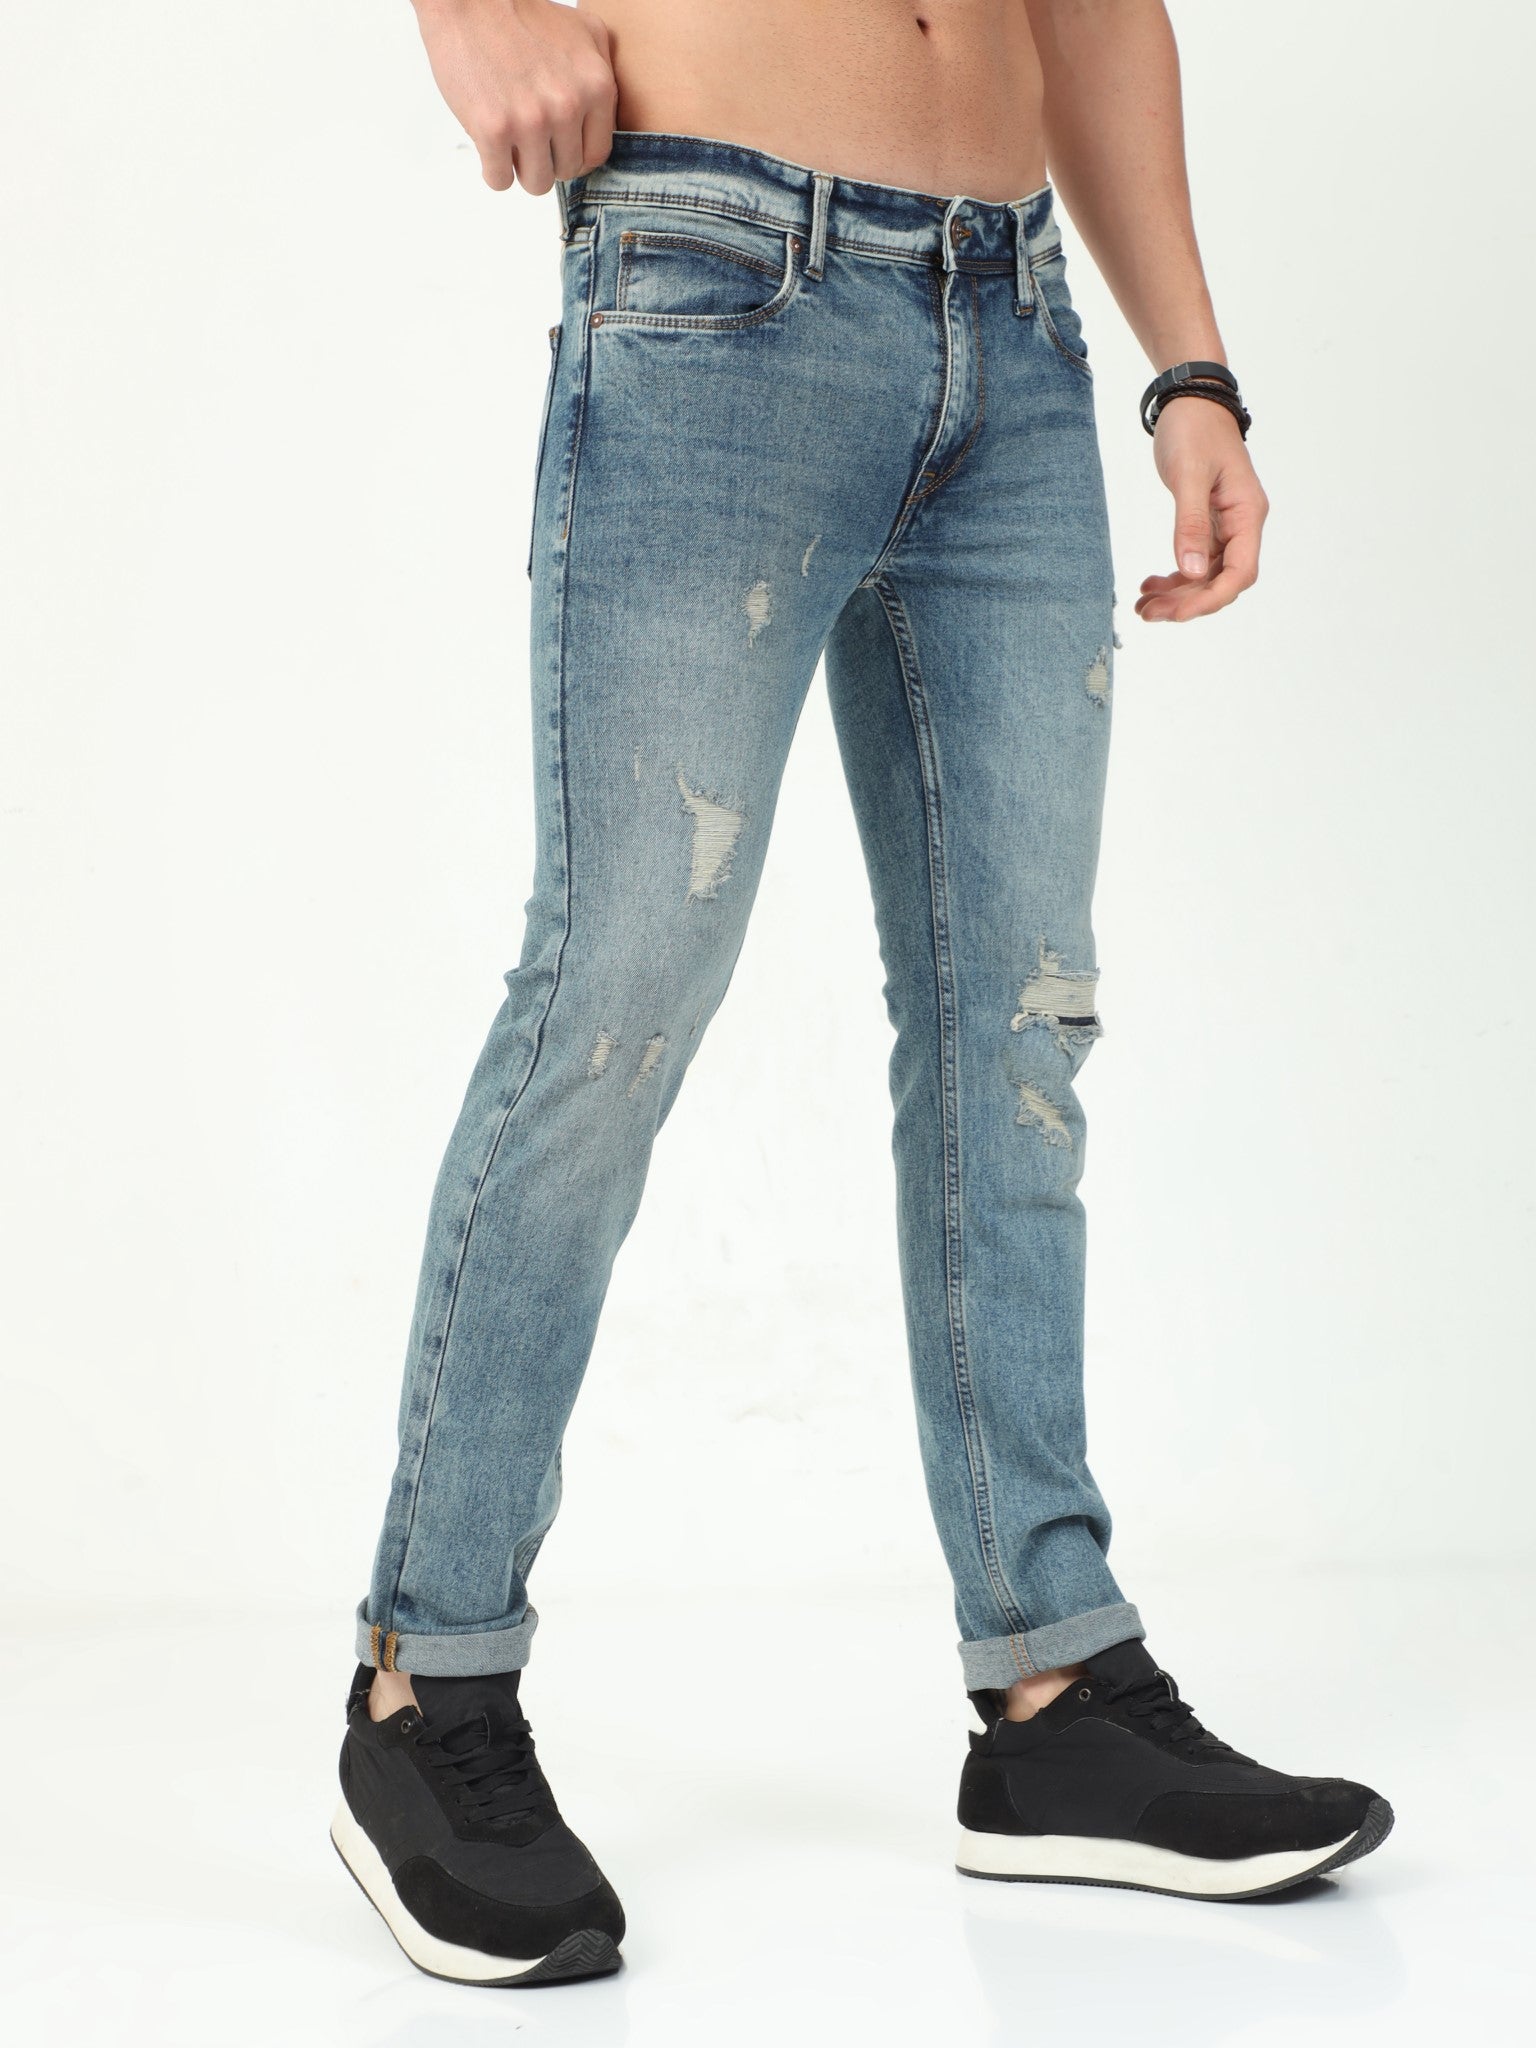 Indigoblue Distressed Slim Fit Jeans for Men 